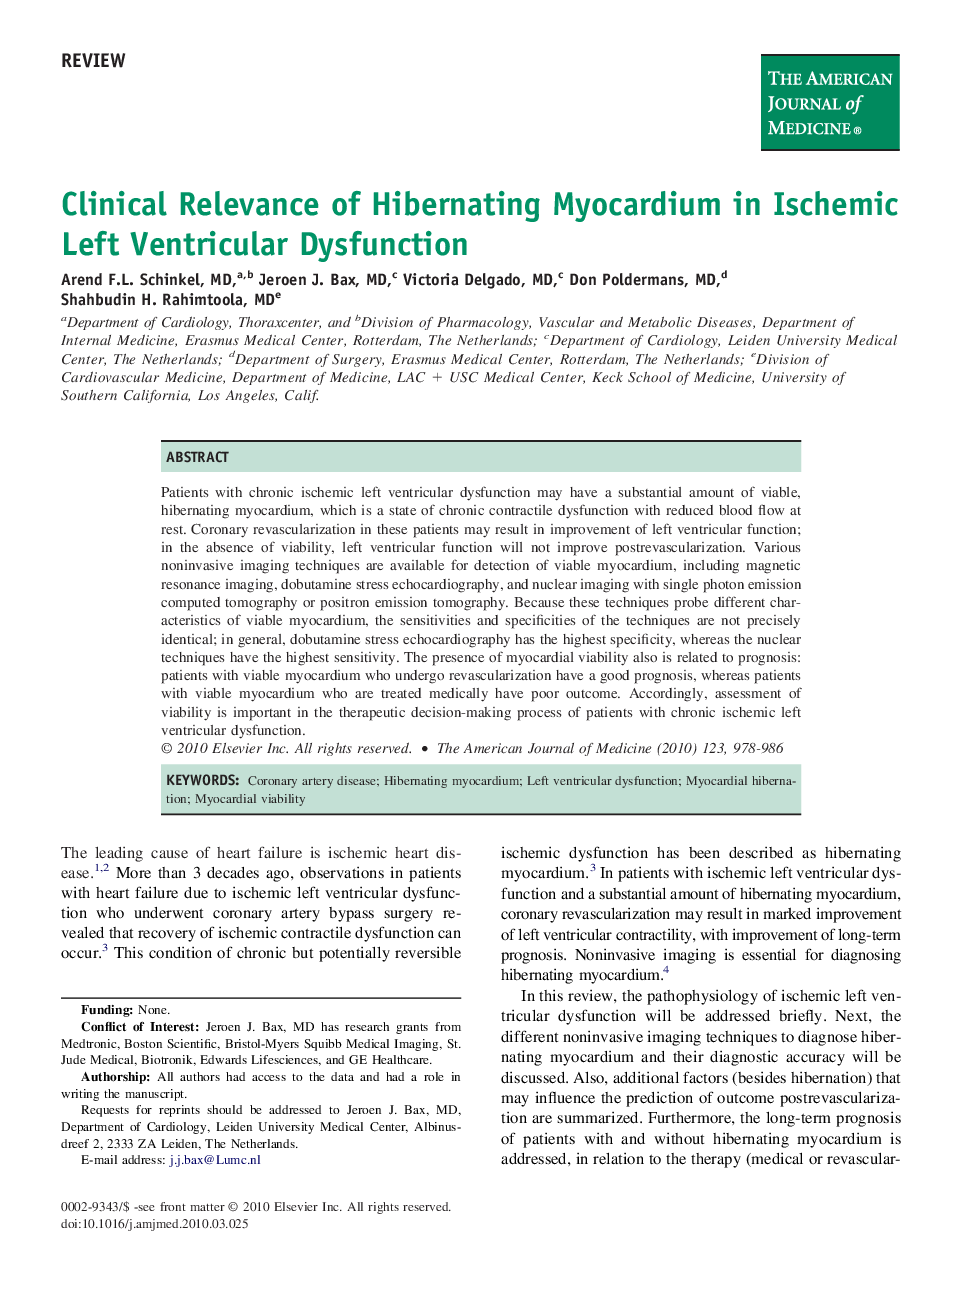 Clinical Relevance of Hibernating Myocardium in Ischemic Left Ventricular Dysfunction 